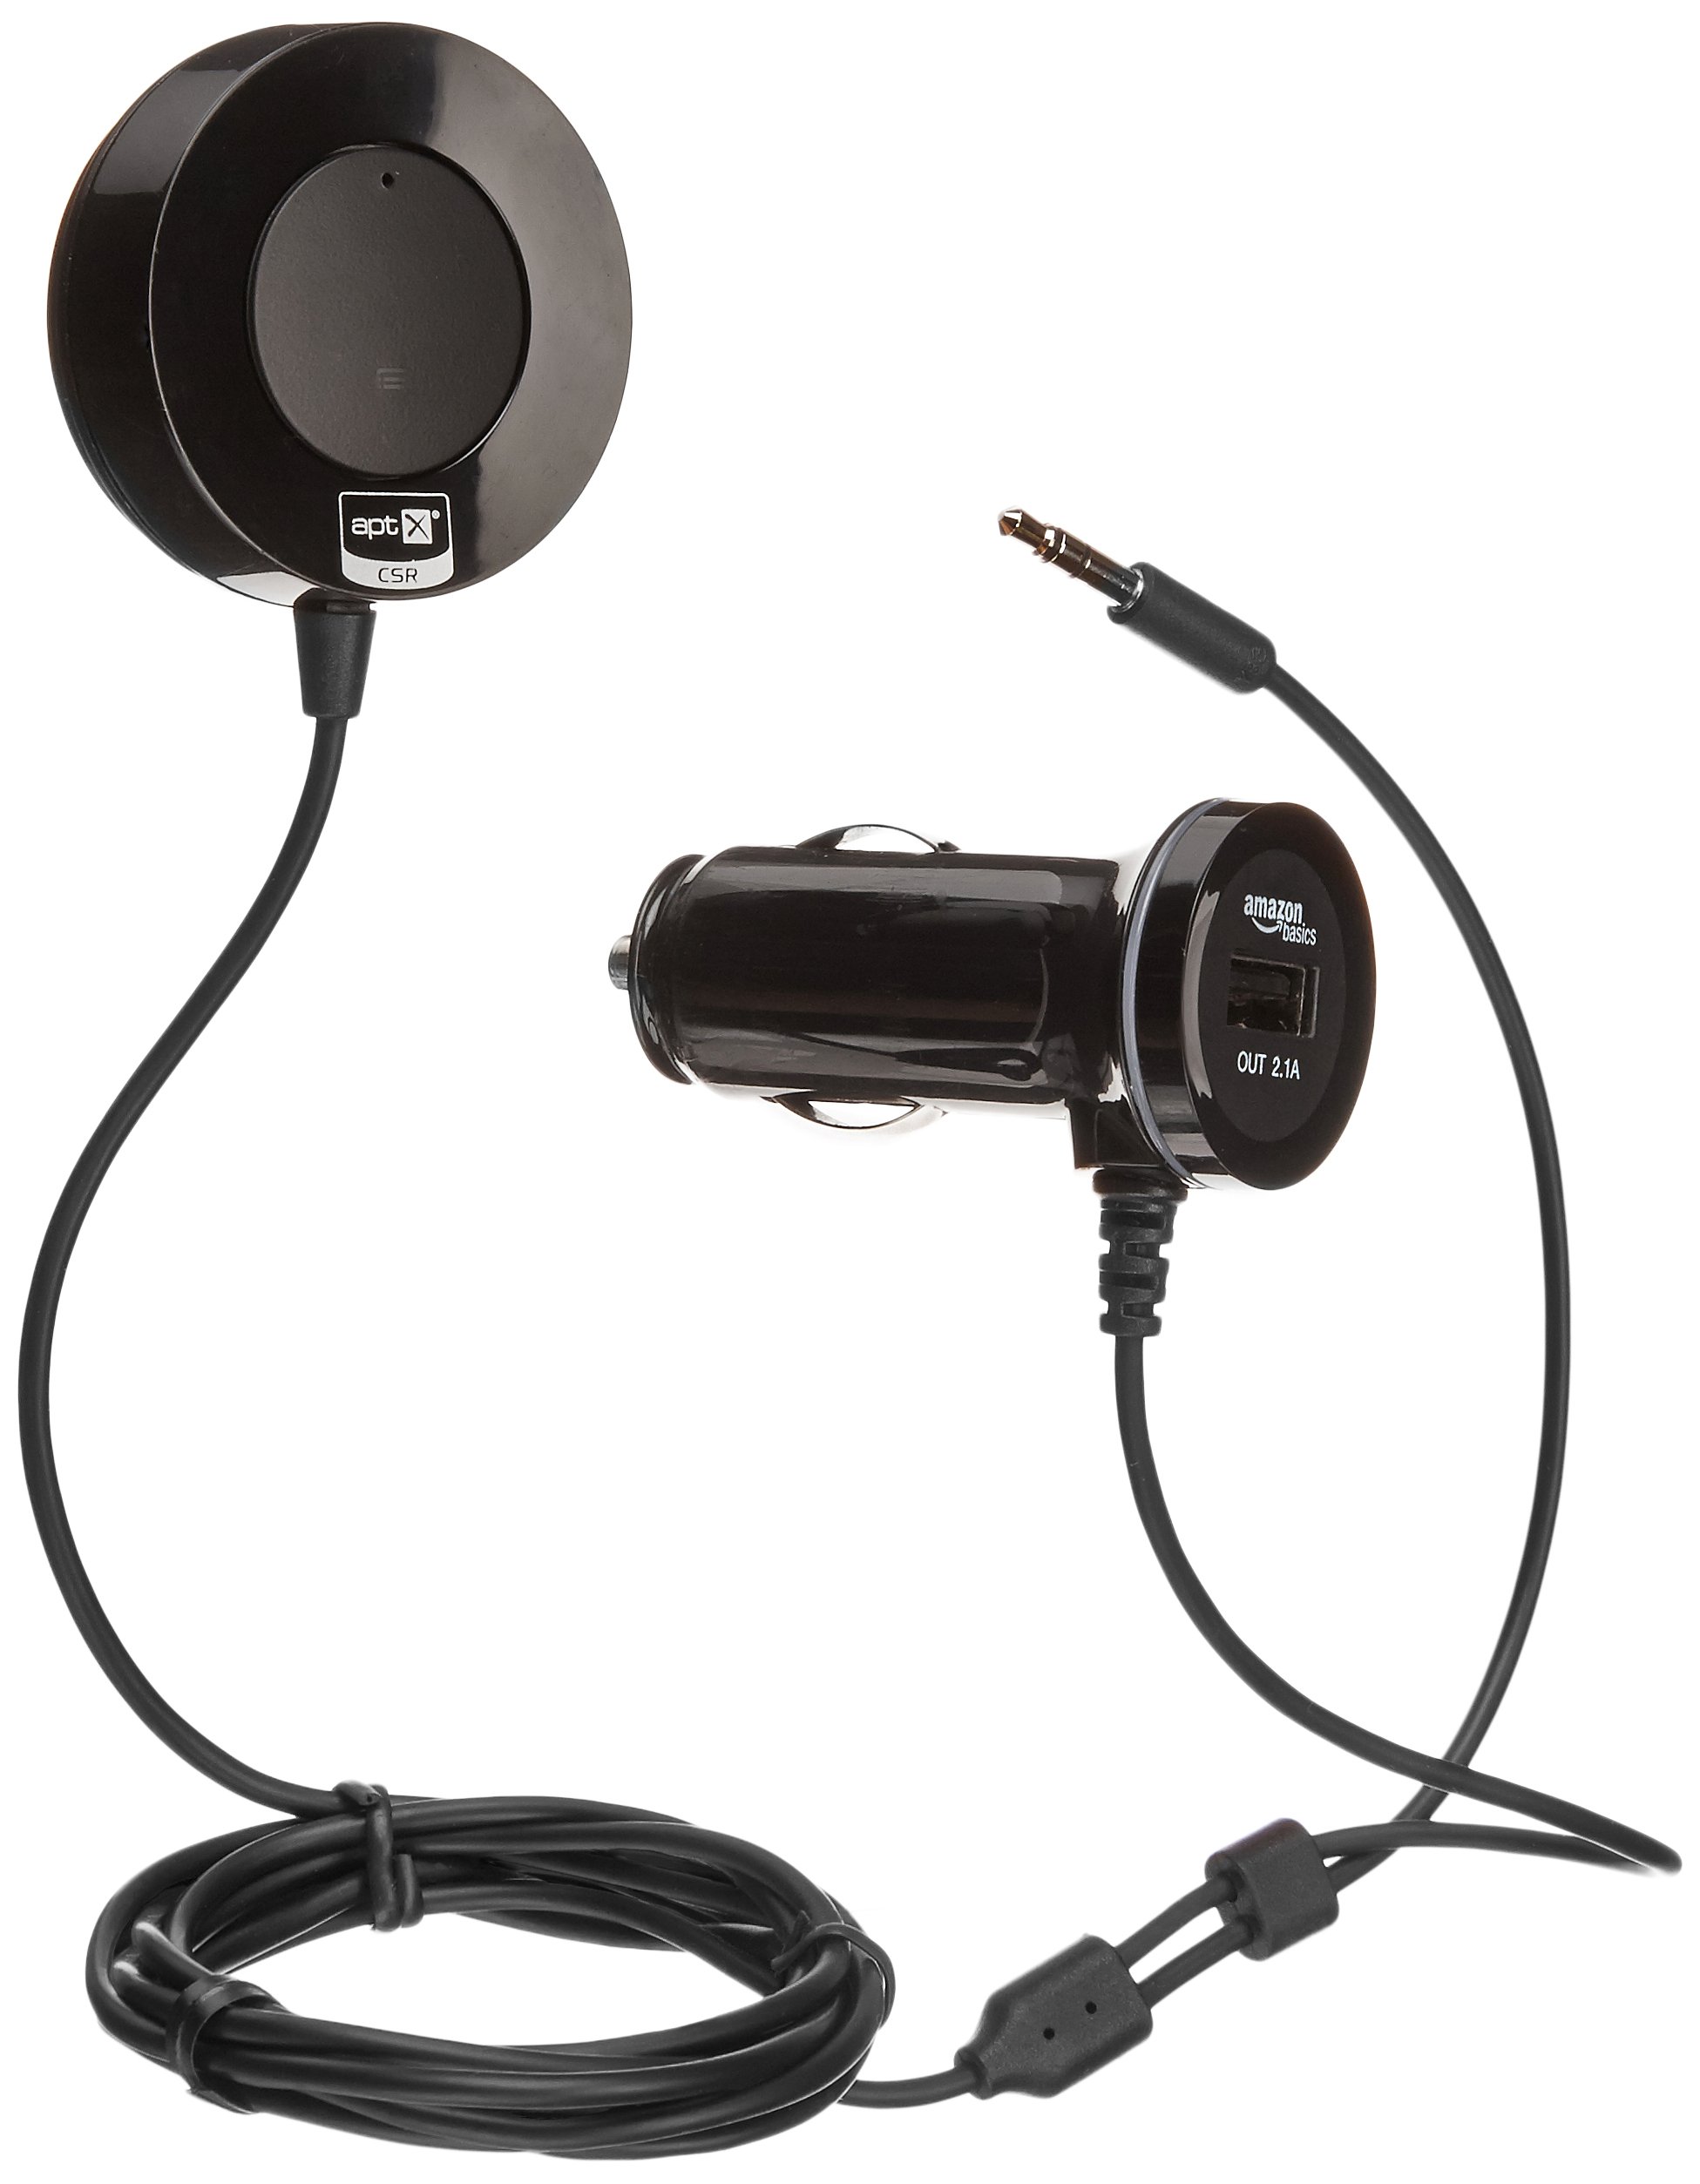 Bộ kết nối âm thanh  cho xe hơi AmazonBasics Bluetooth Hands-Free Car Kit with 3.5mm Aux Jack